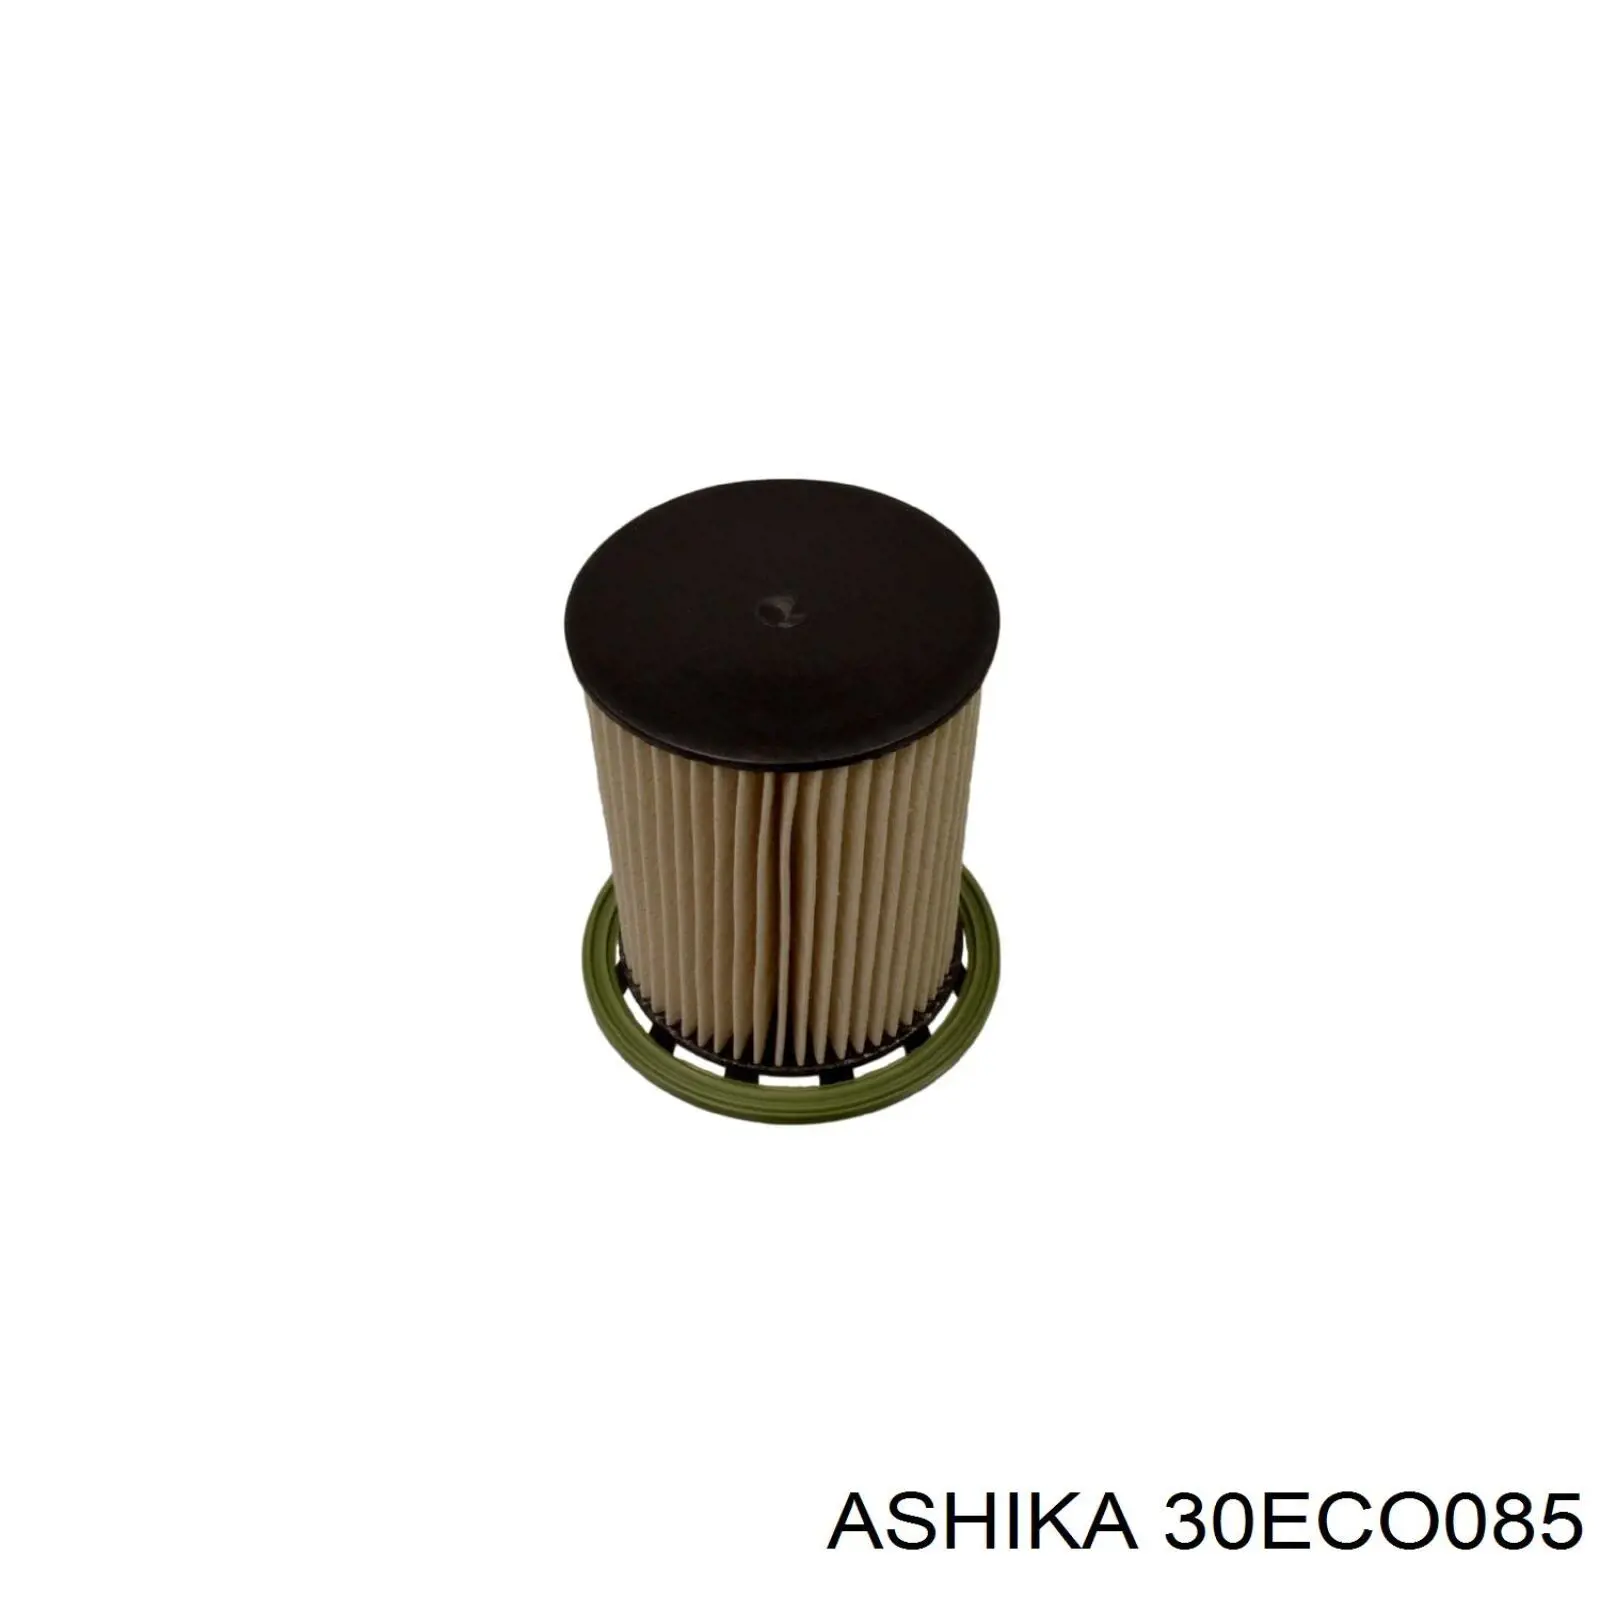 30ECO085 Ashika filtro de combustible